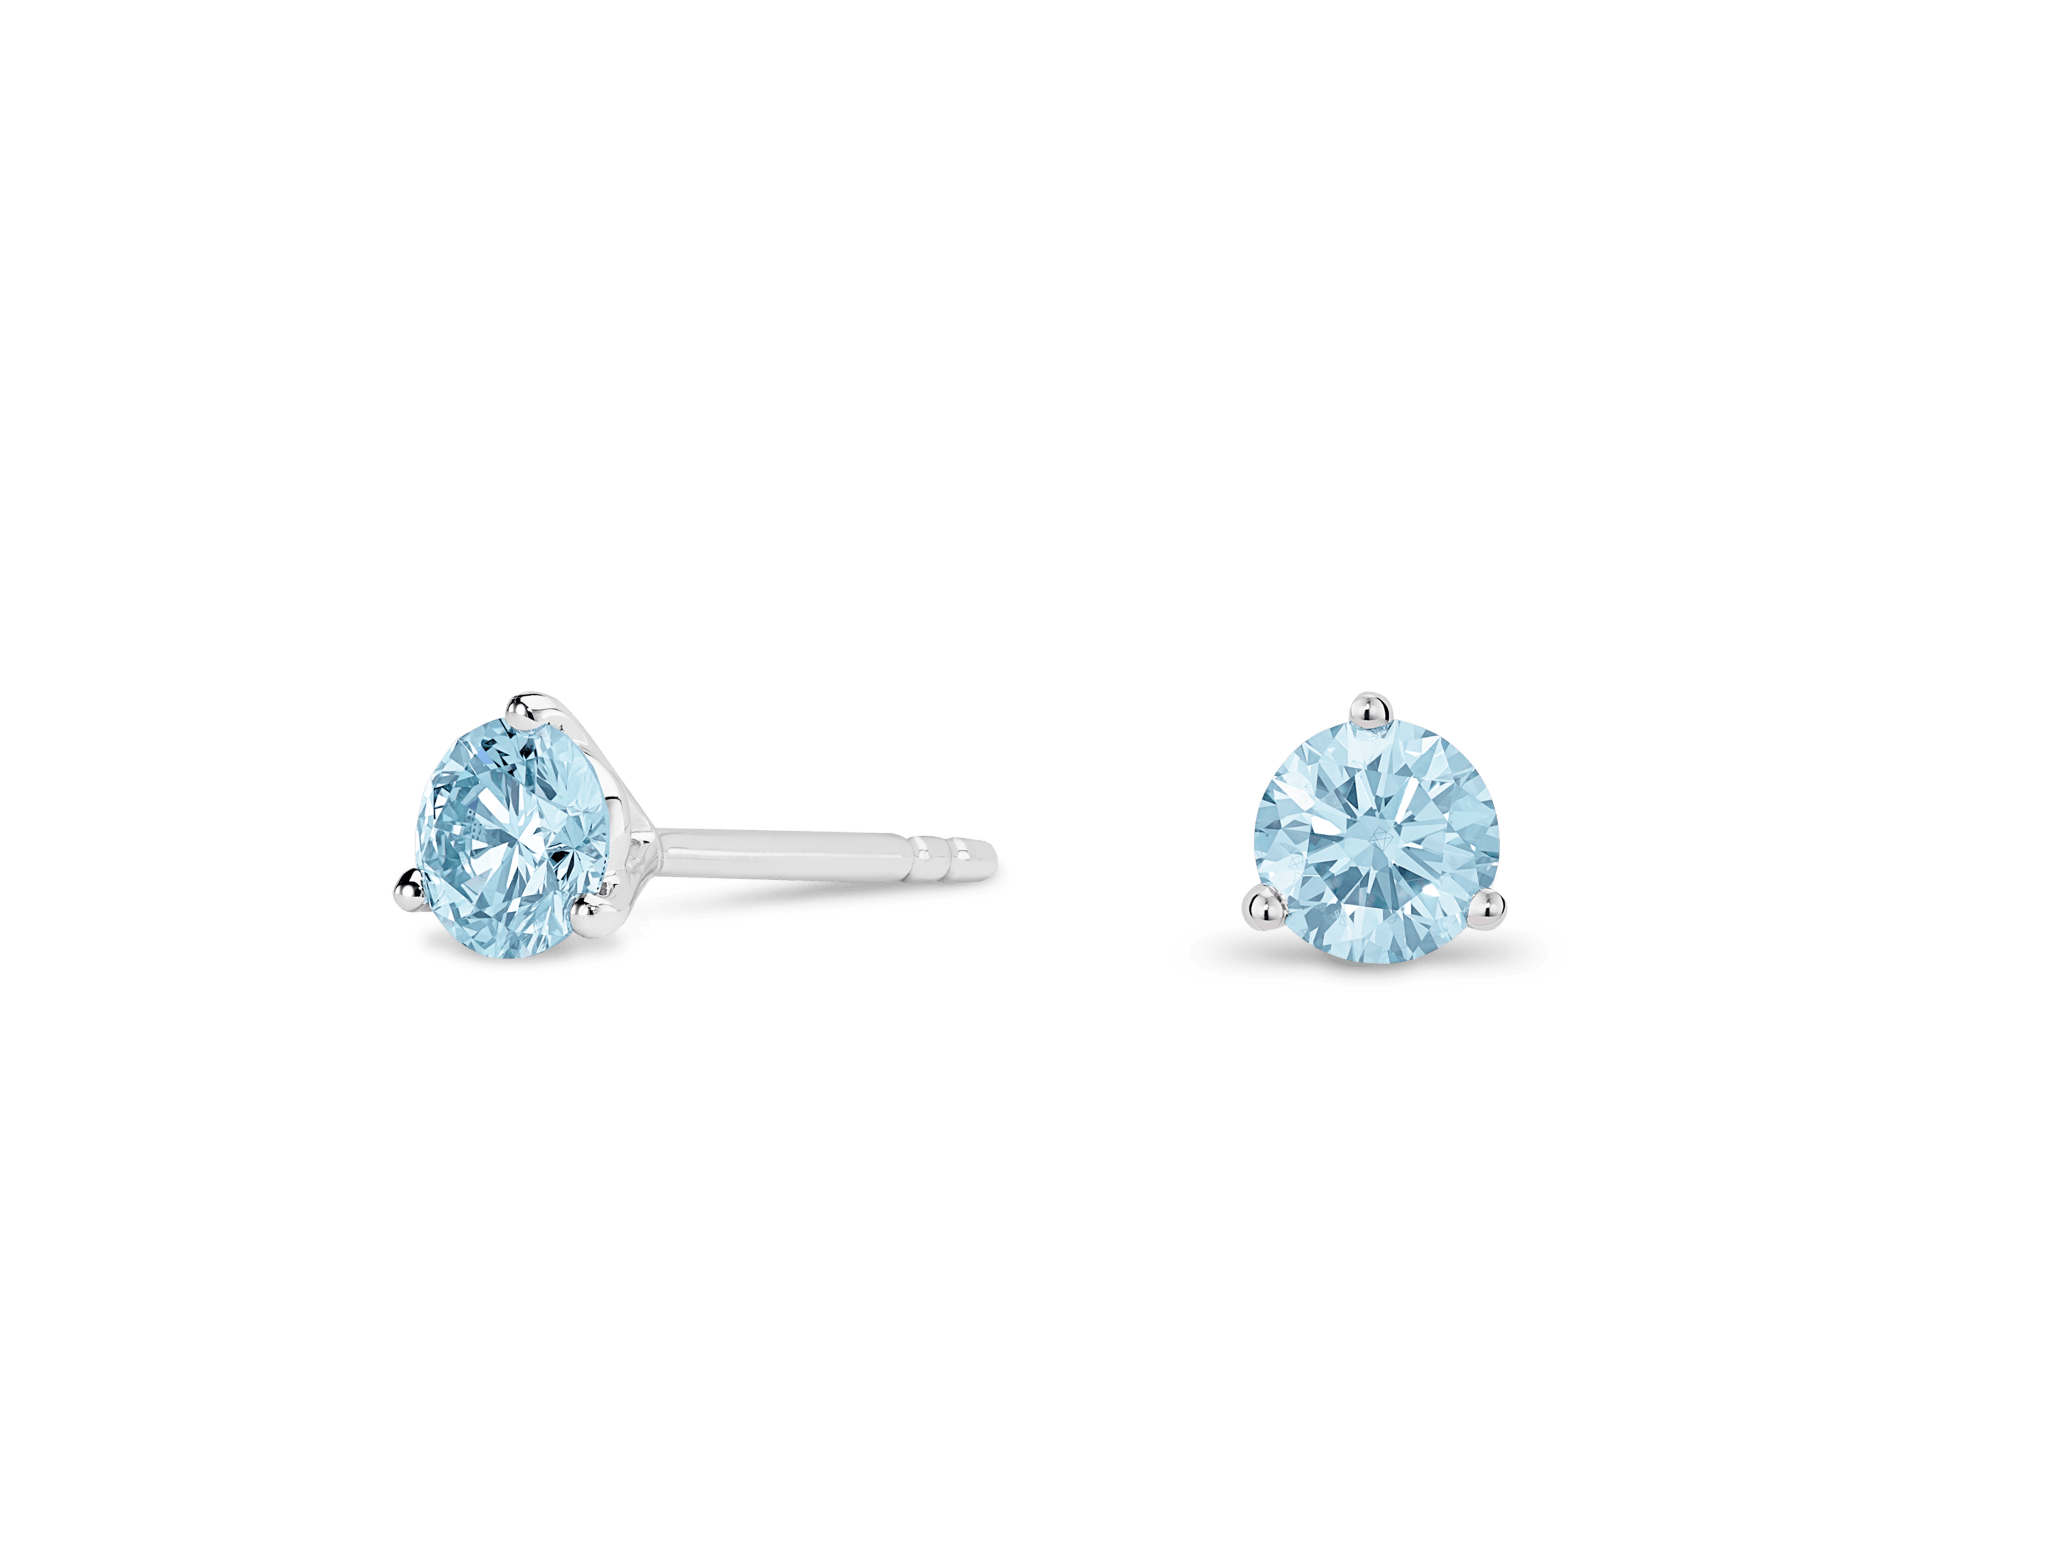 Discover Stunning Blue GIA Diamond Jewelry - Rare Colors